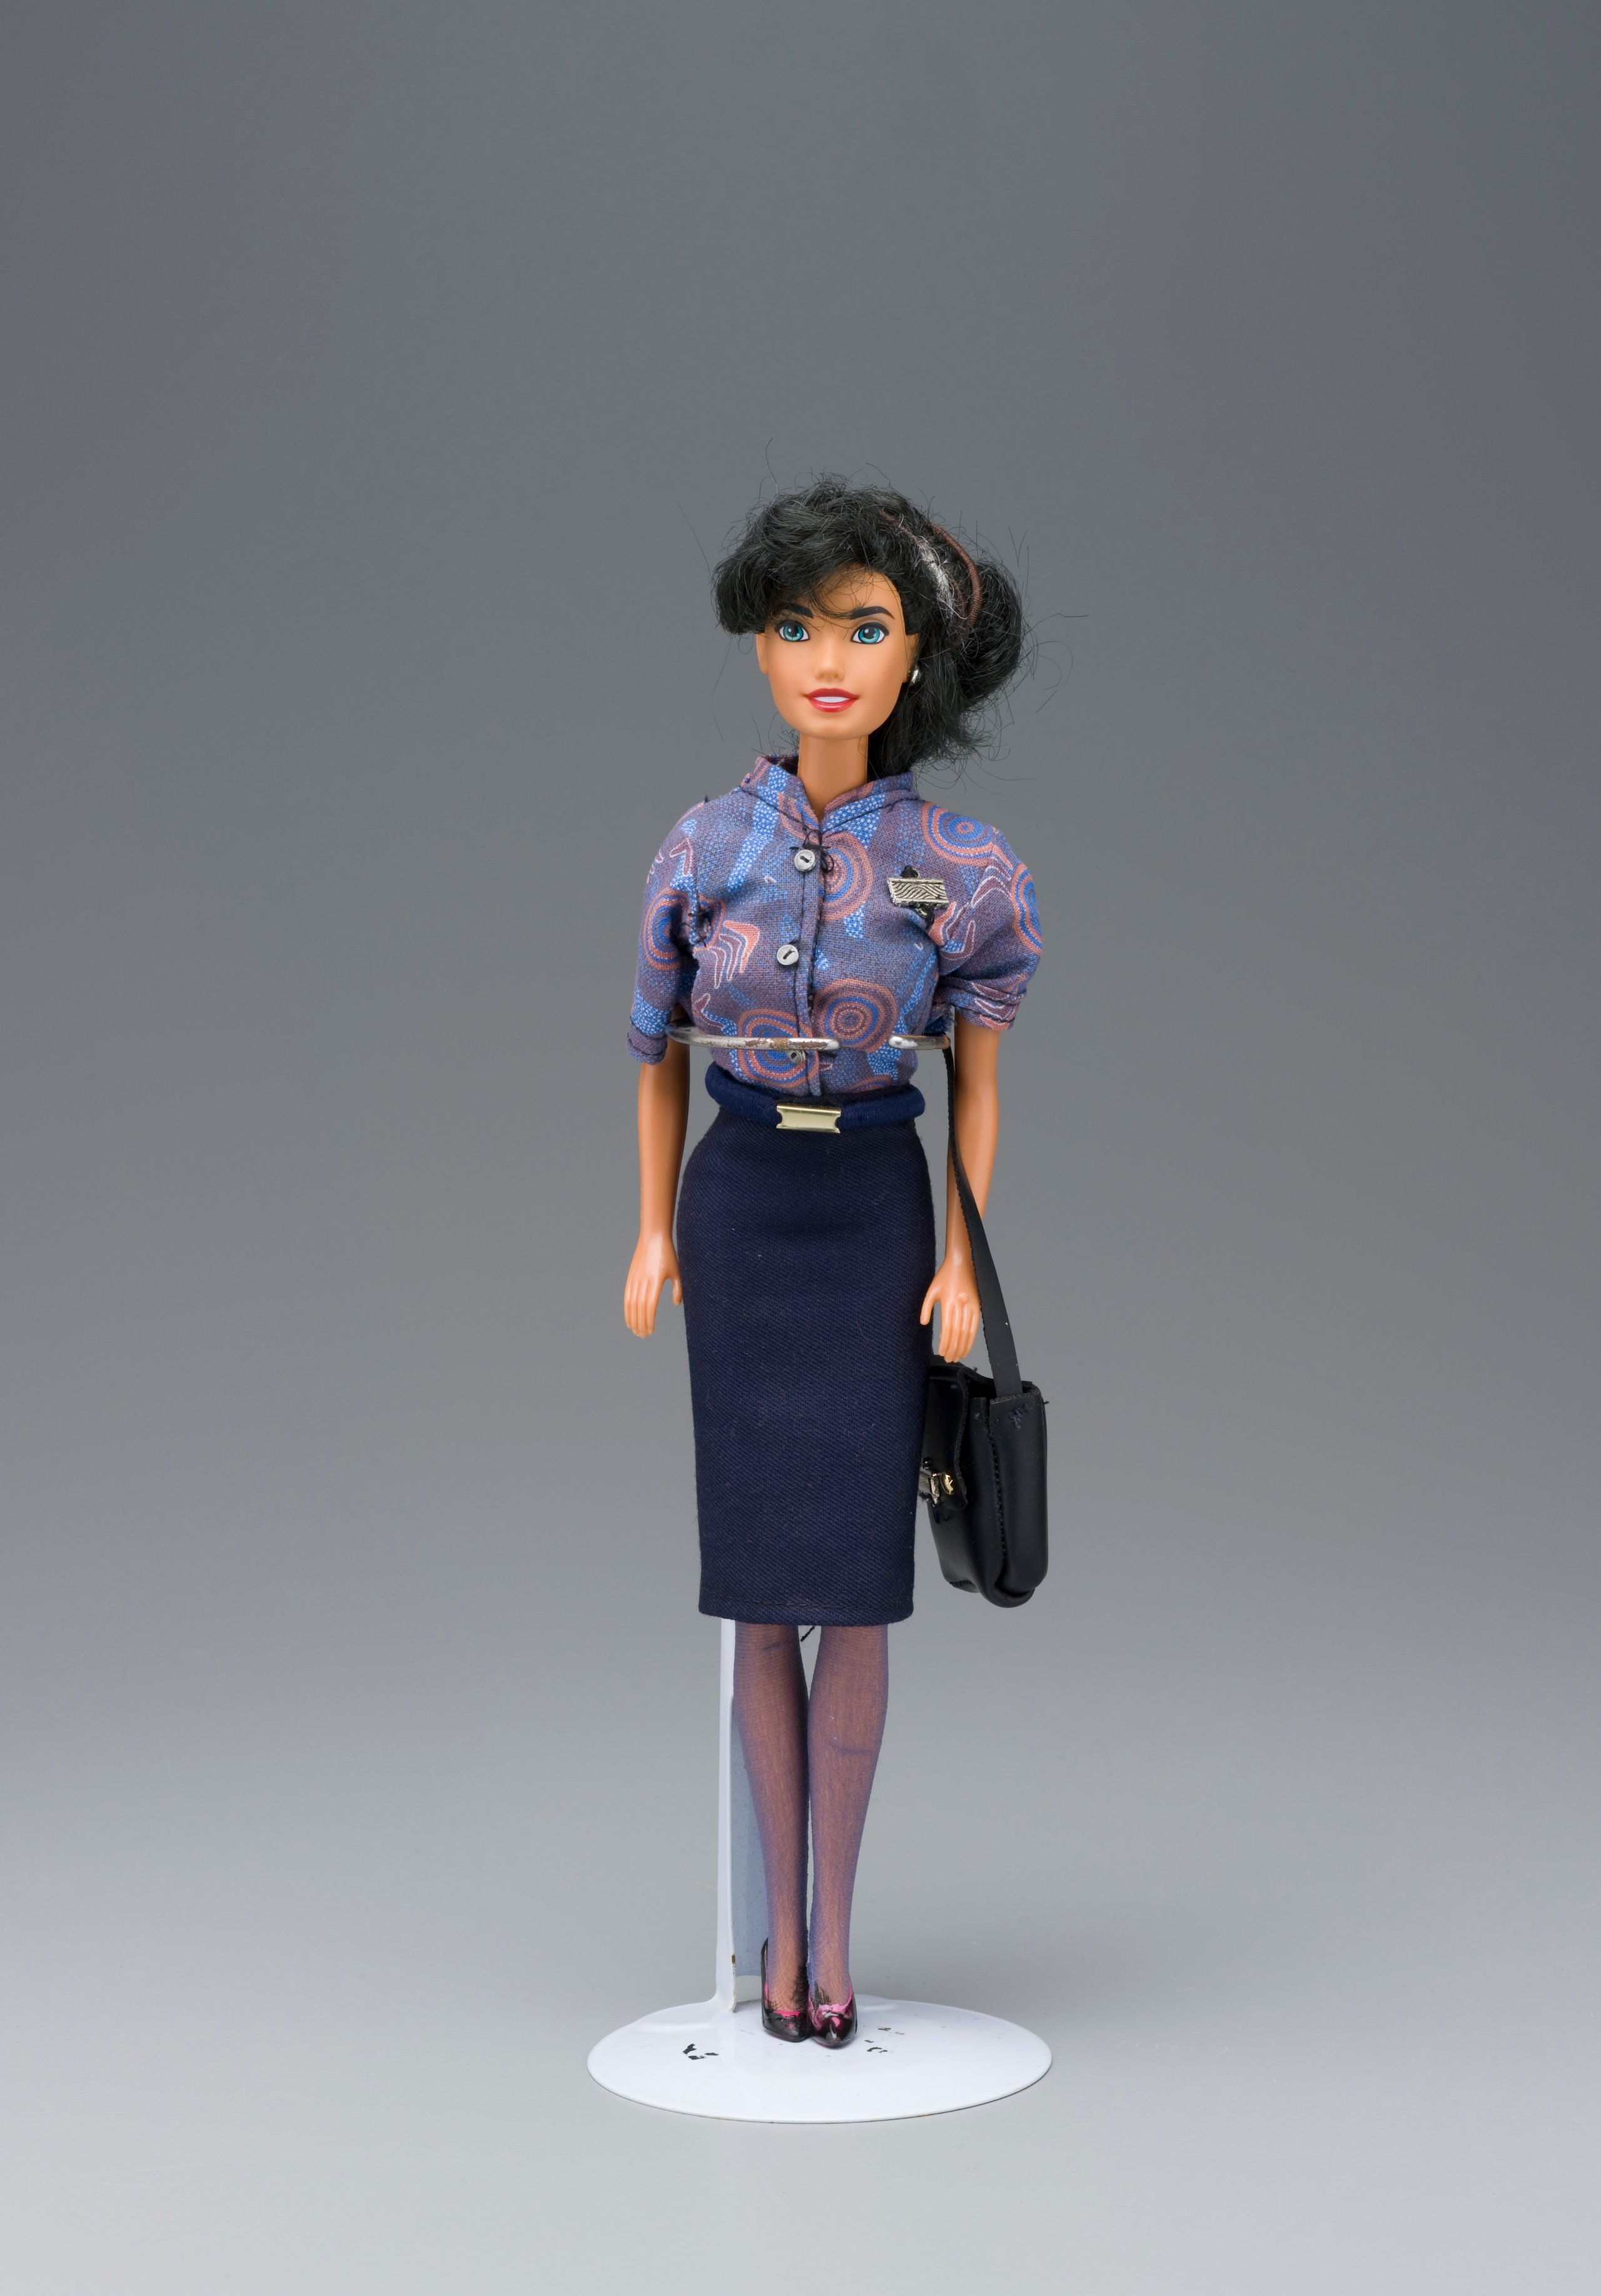 'Barbie' dolls wearing Qantas uniforms